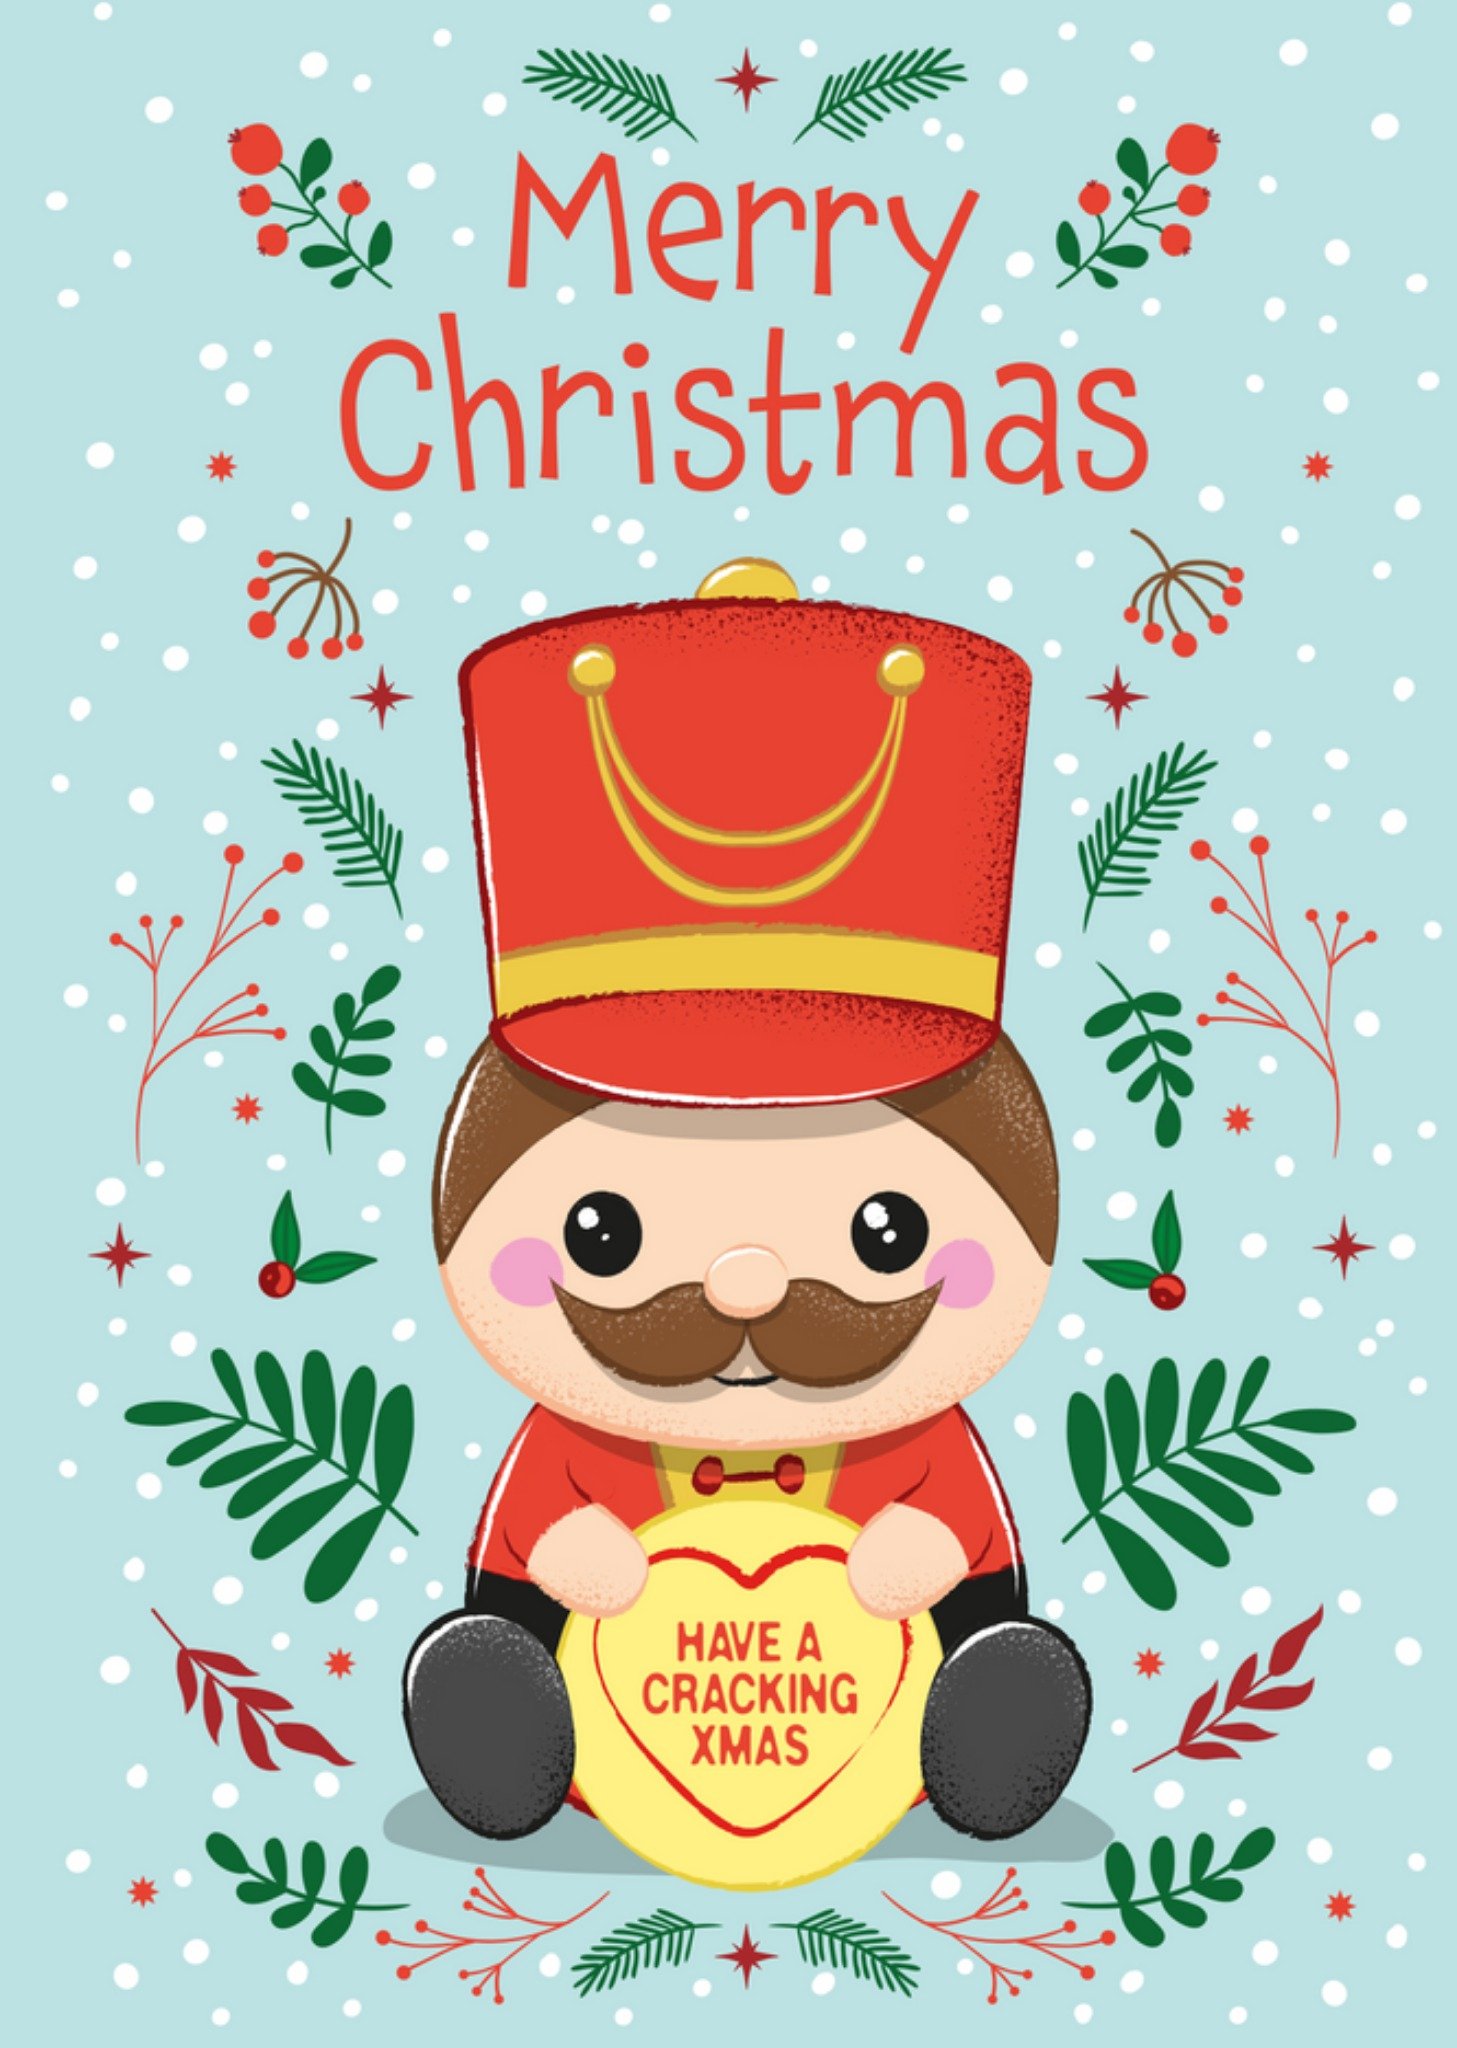 Love Hearts Swizzels Posh Paws Cute Nutcracker Plush Cracking Christmas Card Ecard